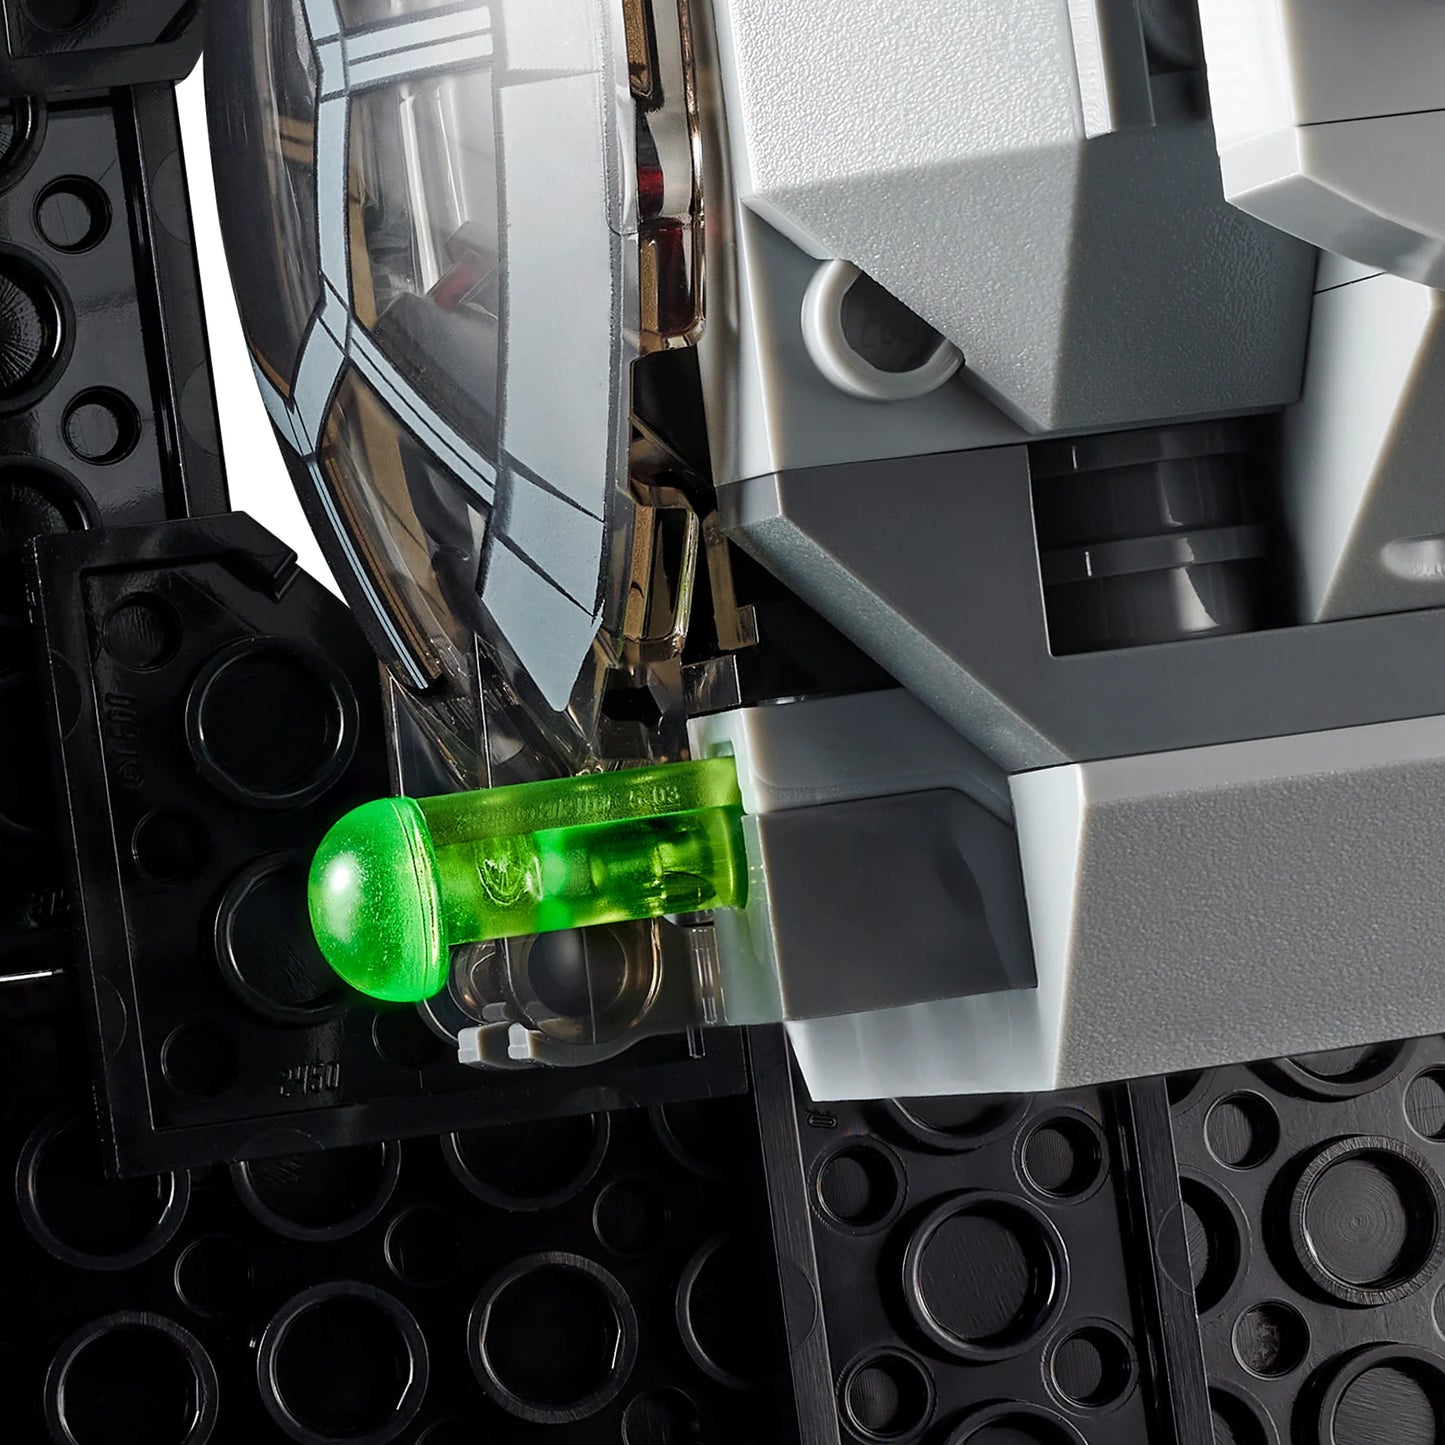 Imperial TIE Fighter - LEGO Star Wars